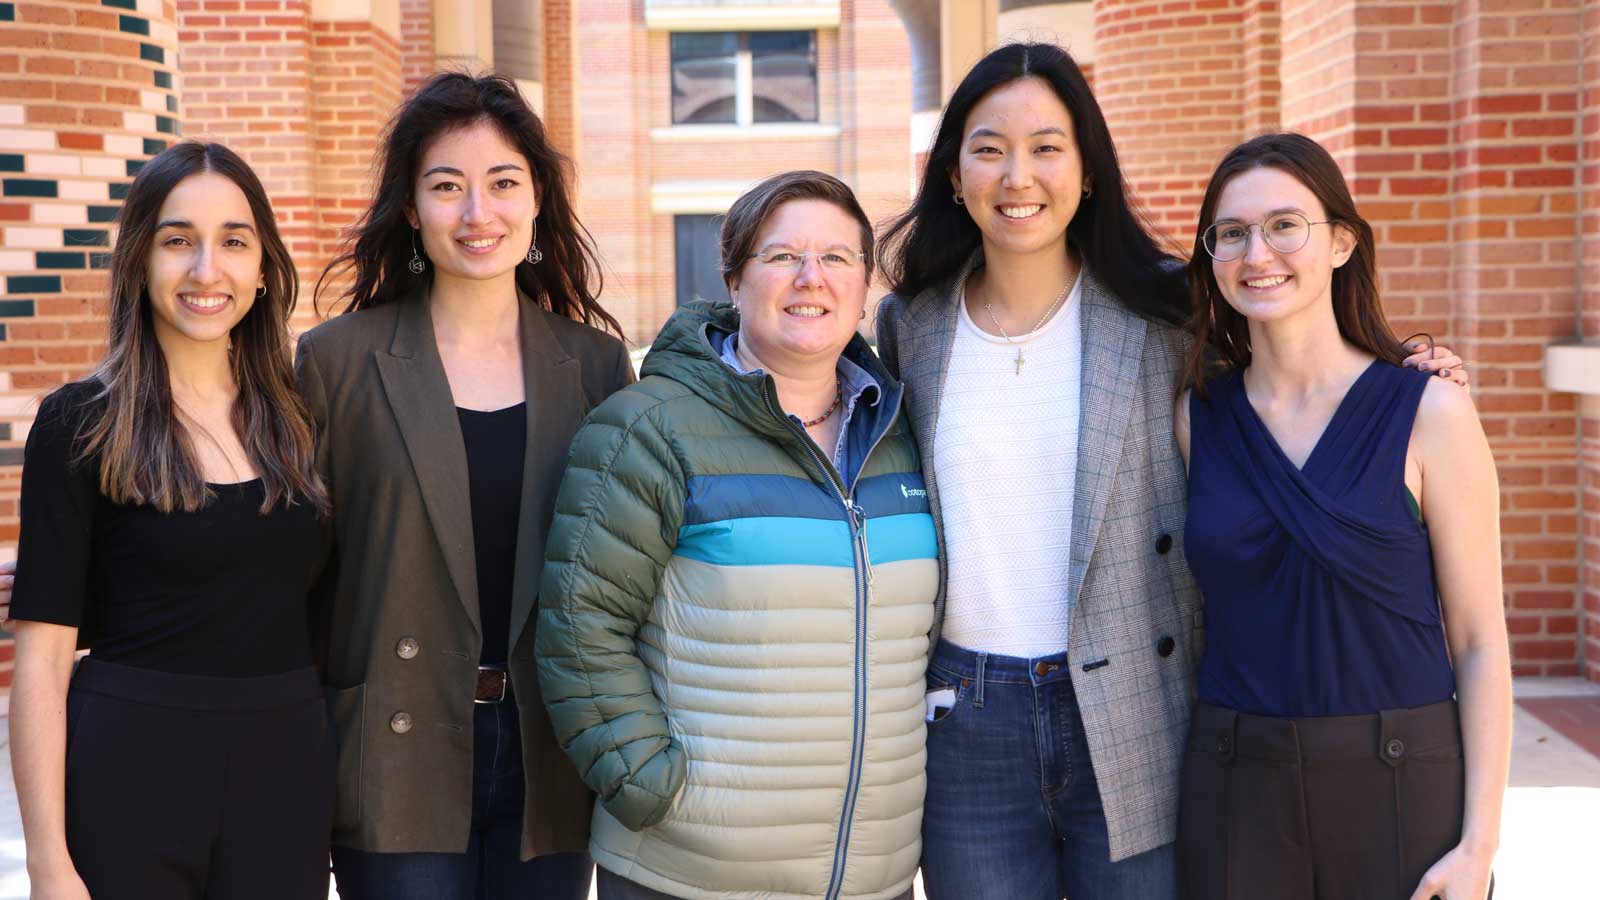 Bilyana Tzolova, Rachael Alfant, Shelly Harvey, Jaihee Choi, and Sara Edelman-Munoz posing for photograph on Rice University campus.